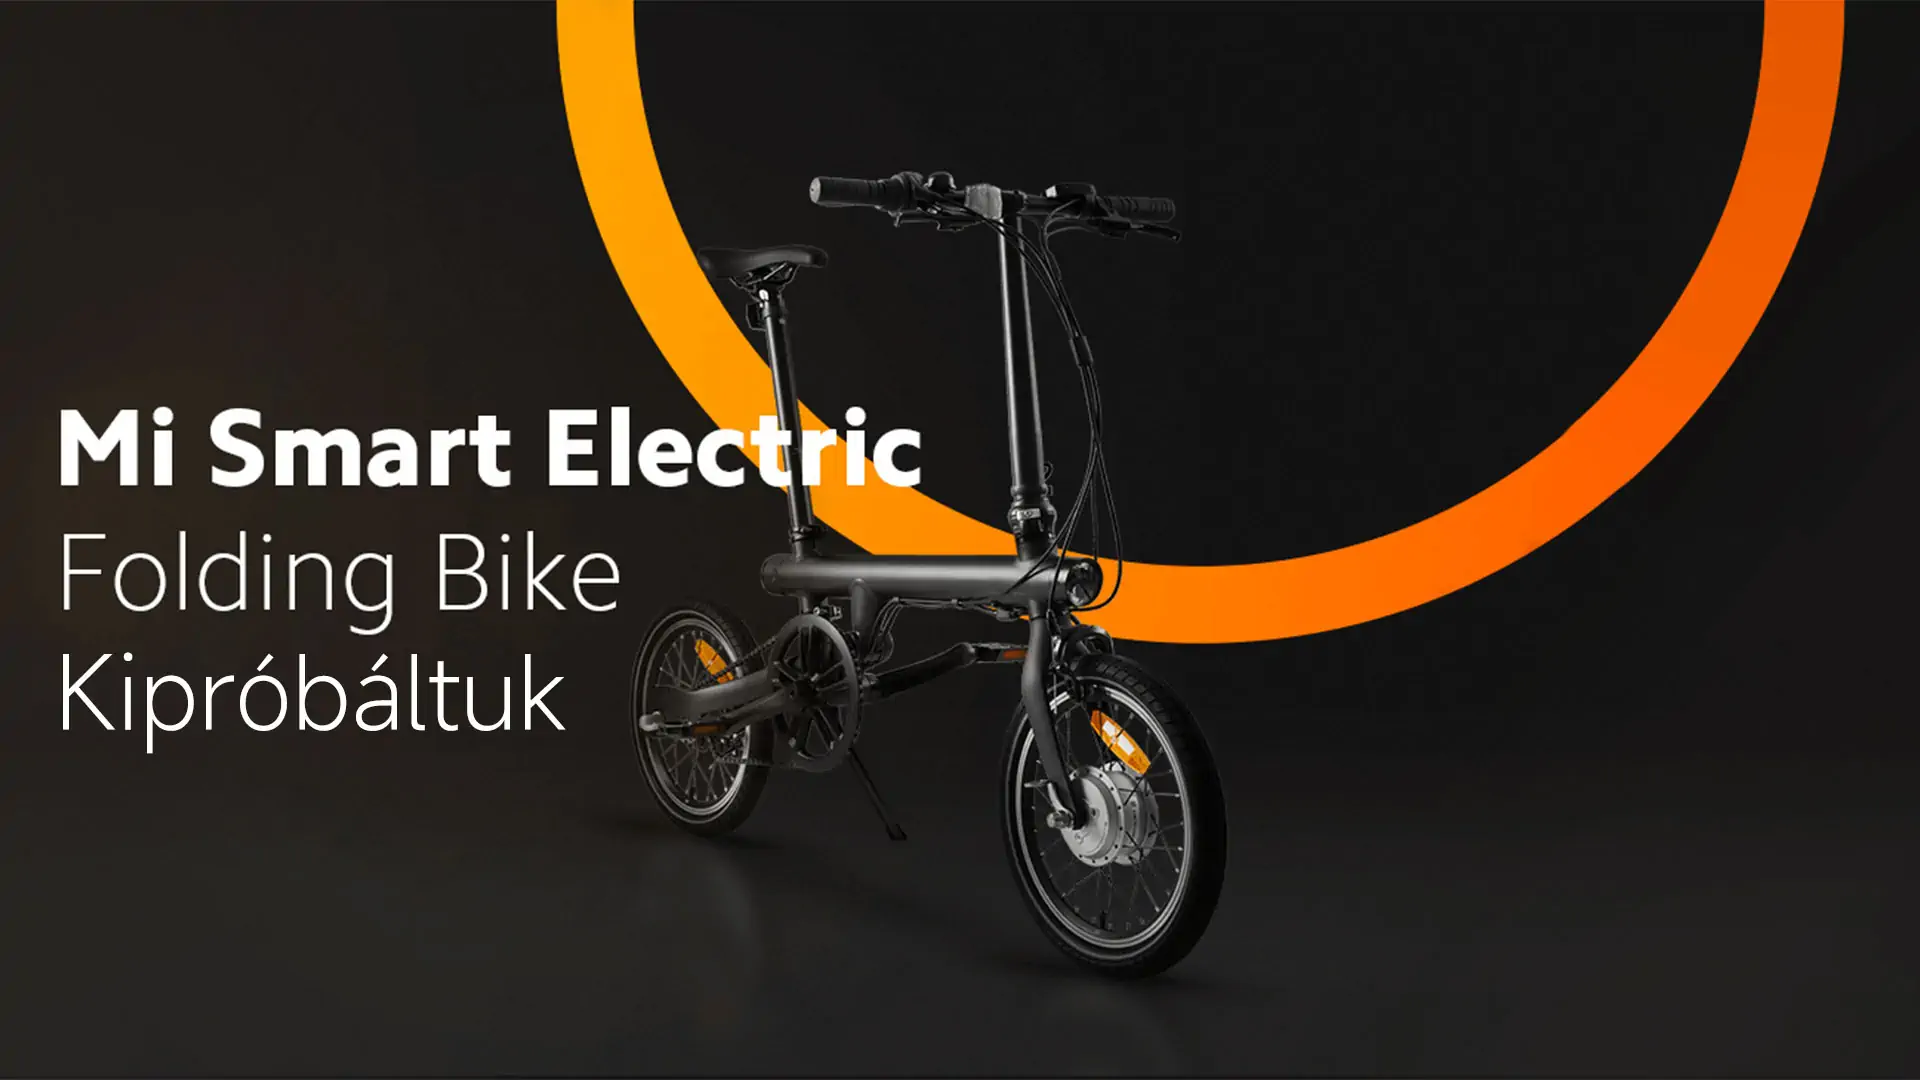 Kipróbáltuk: Xiaomi Mi Smart Electric Folding Bike